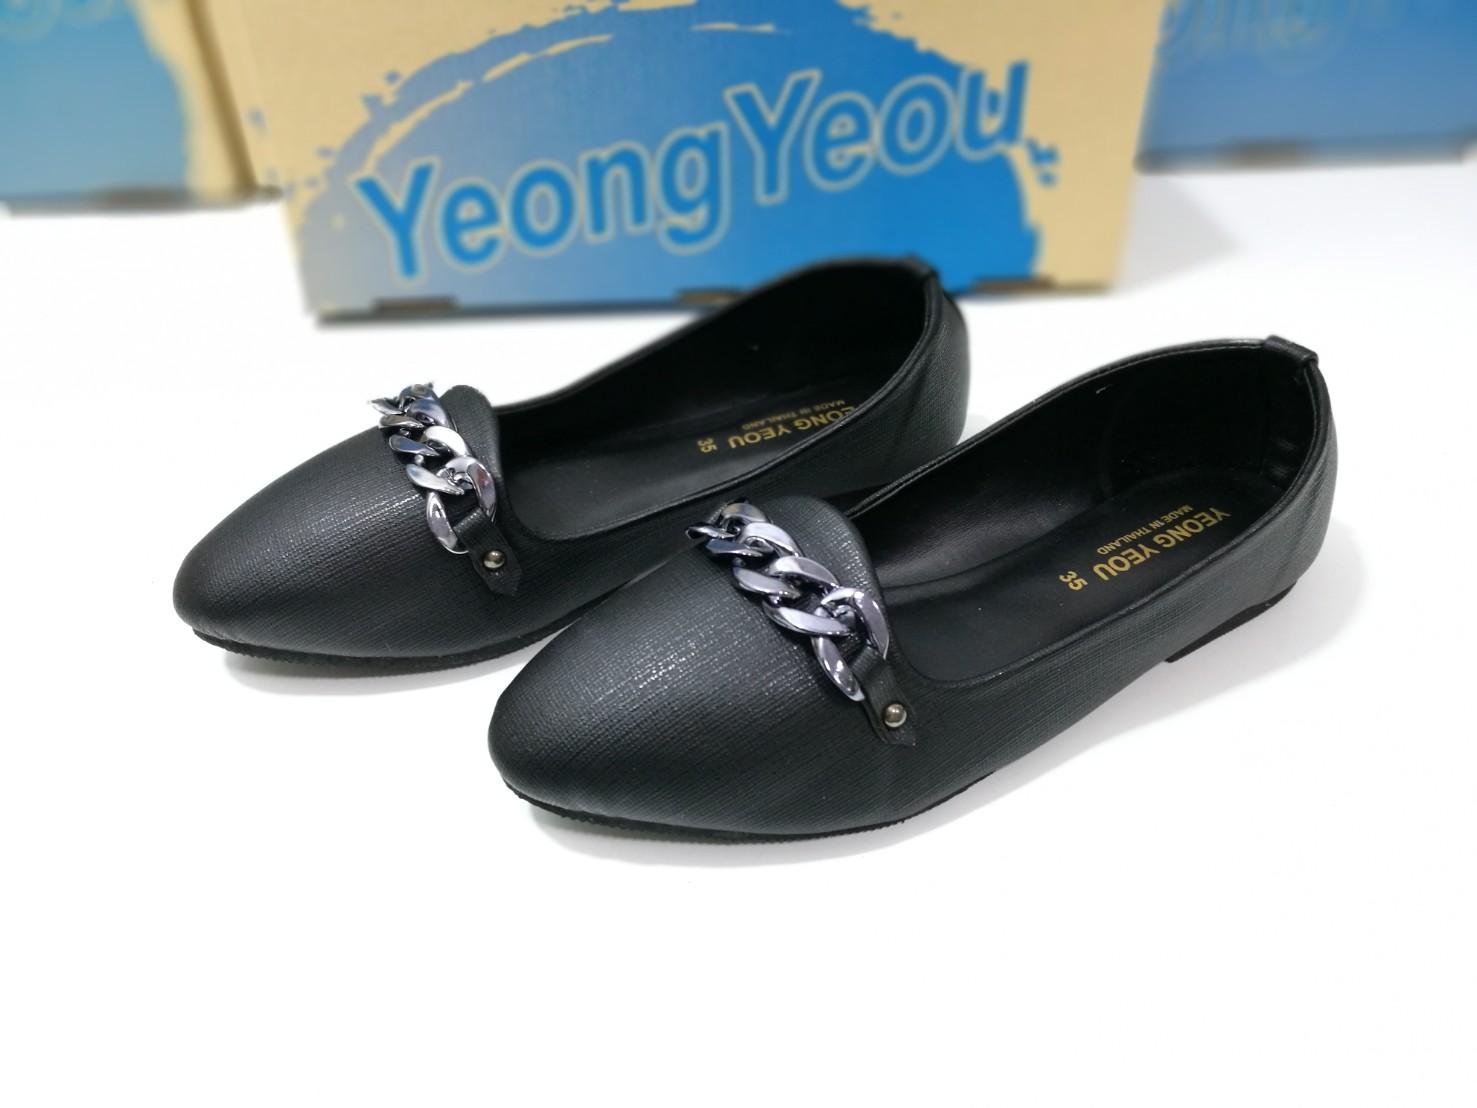 yeong yeou รองเท้าคัทชูหัวแหลมส้นแบนหนังออยประดับโซ่ yy603